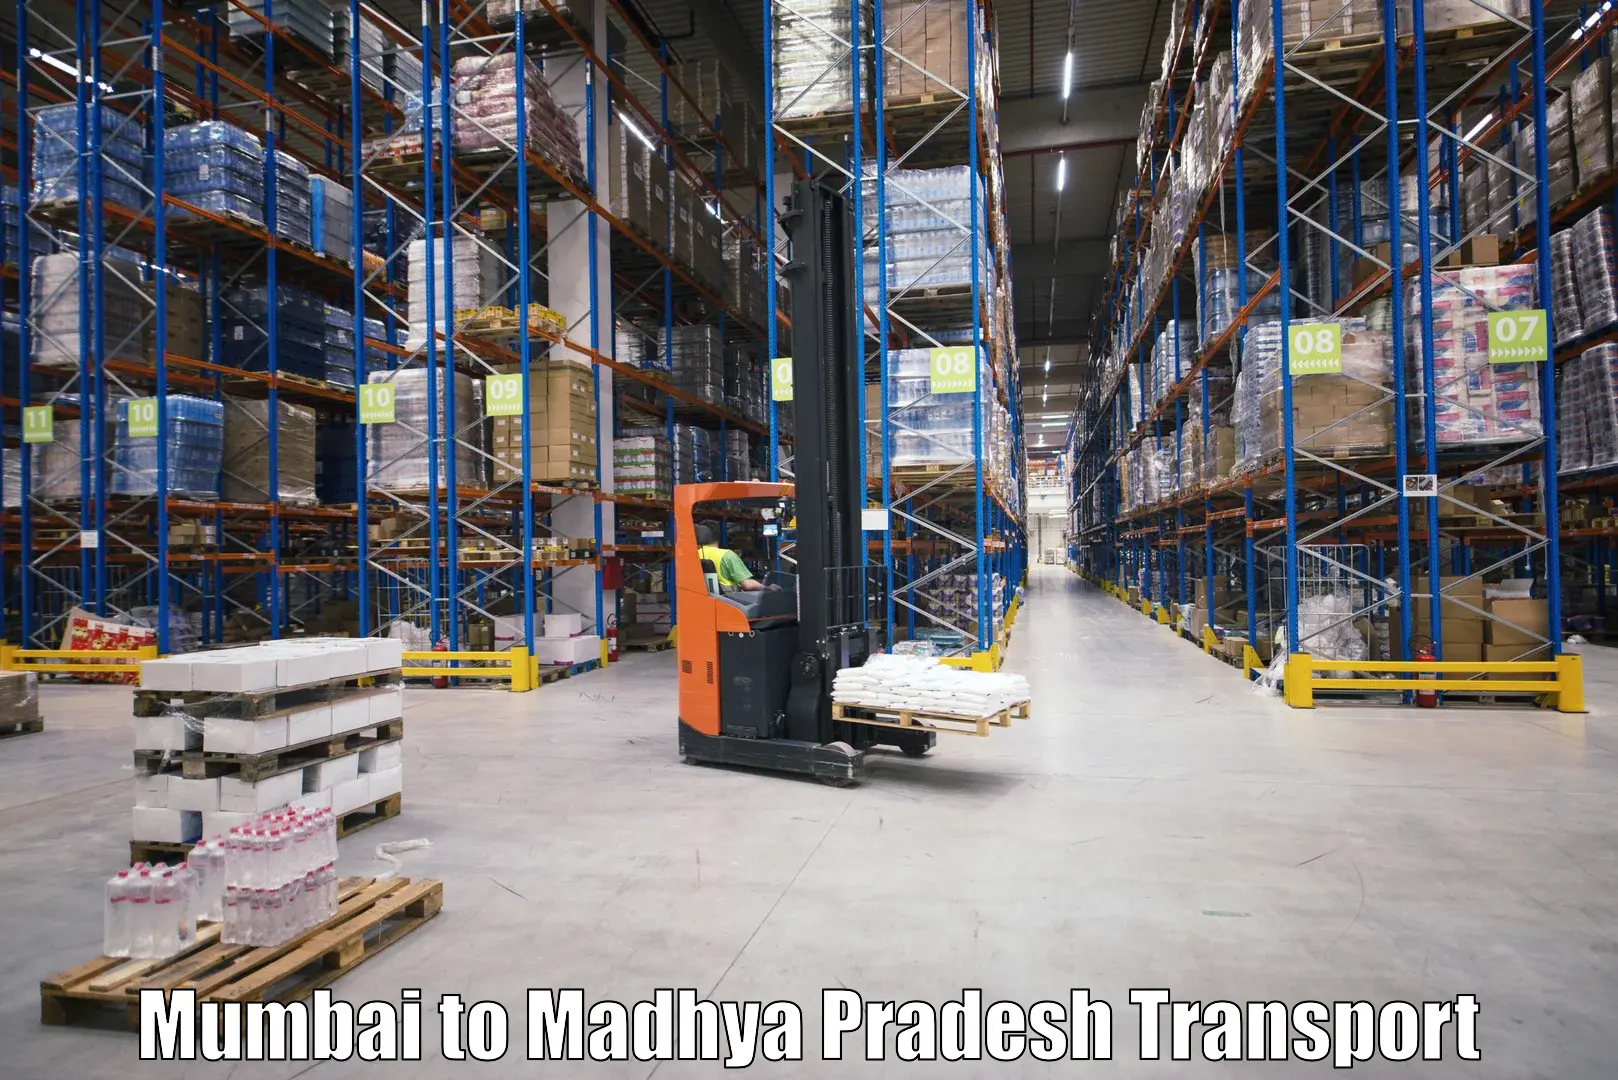 Truck transport companies in India Mumbai to Panna